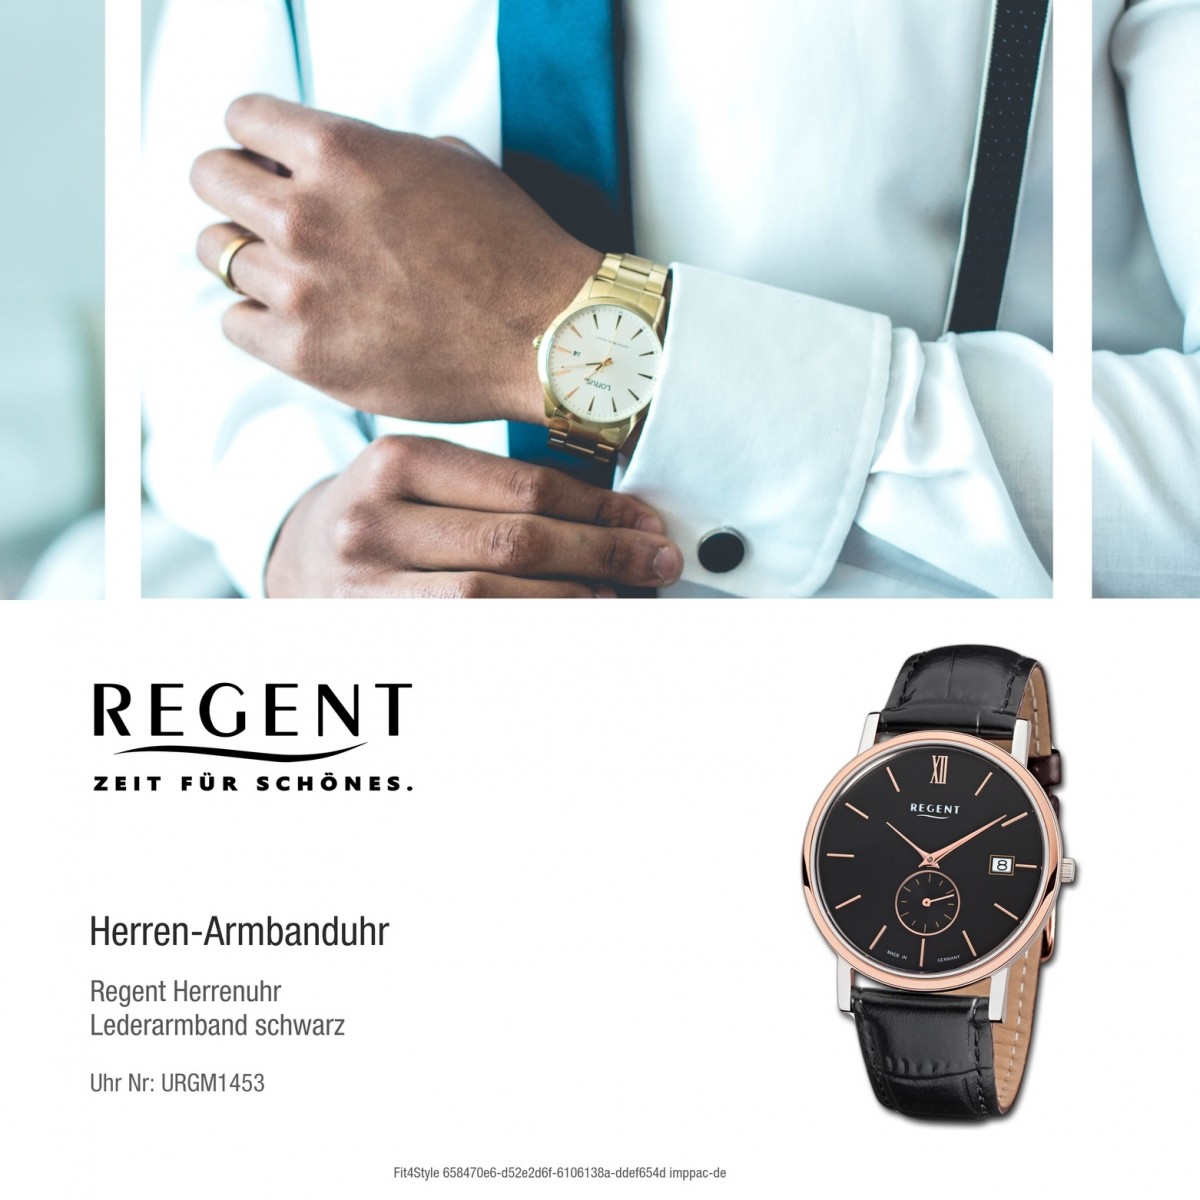 URGM1453 Regent Quarz-Uhr Leder-Armband Uhr schwarz Herren-Armbanduhr